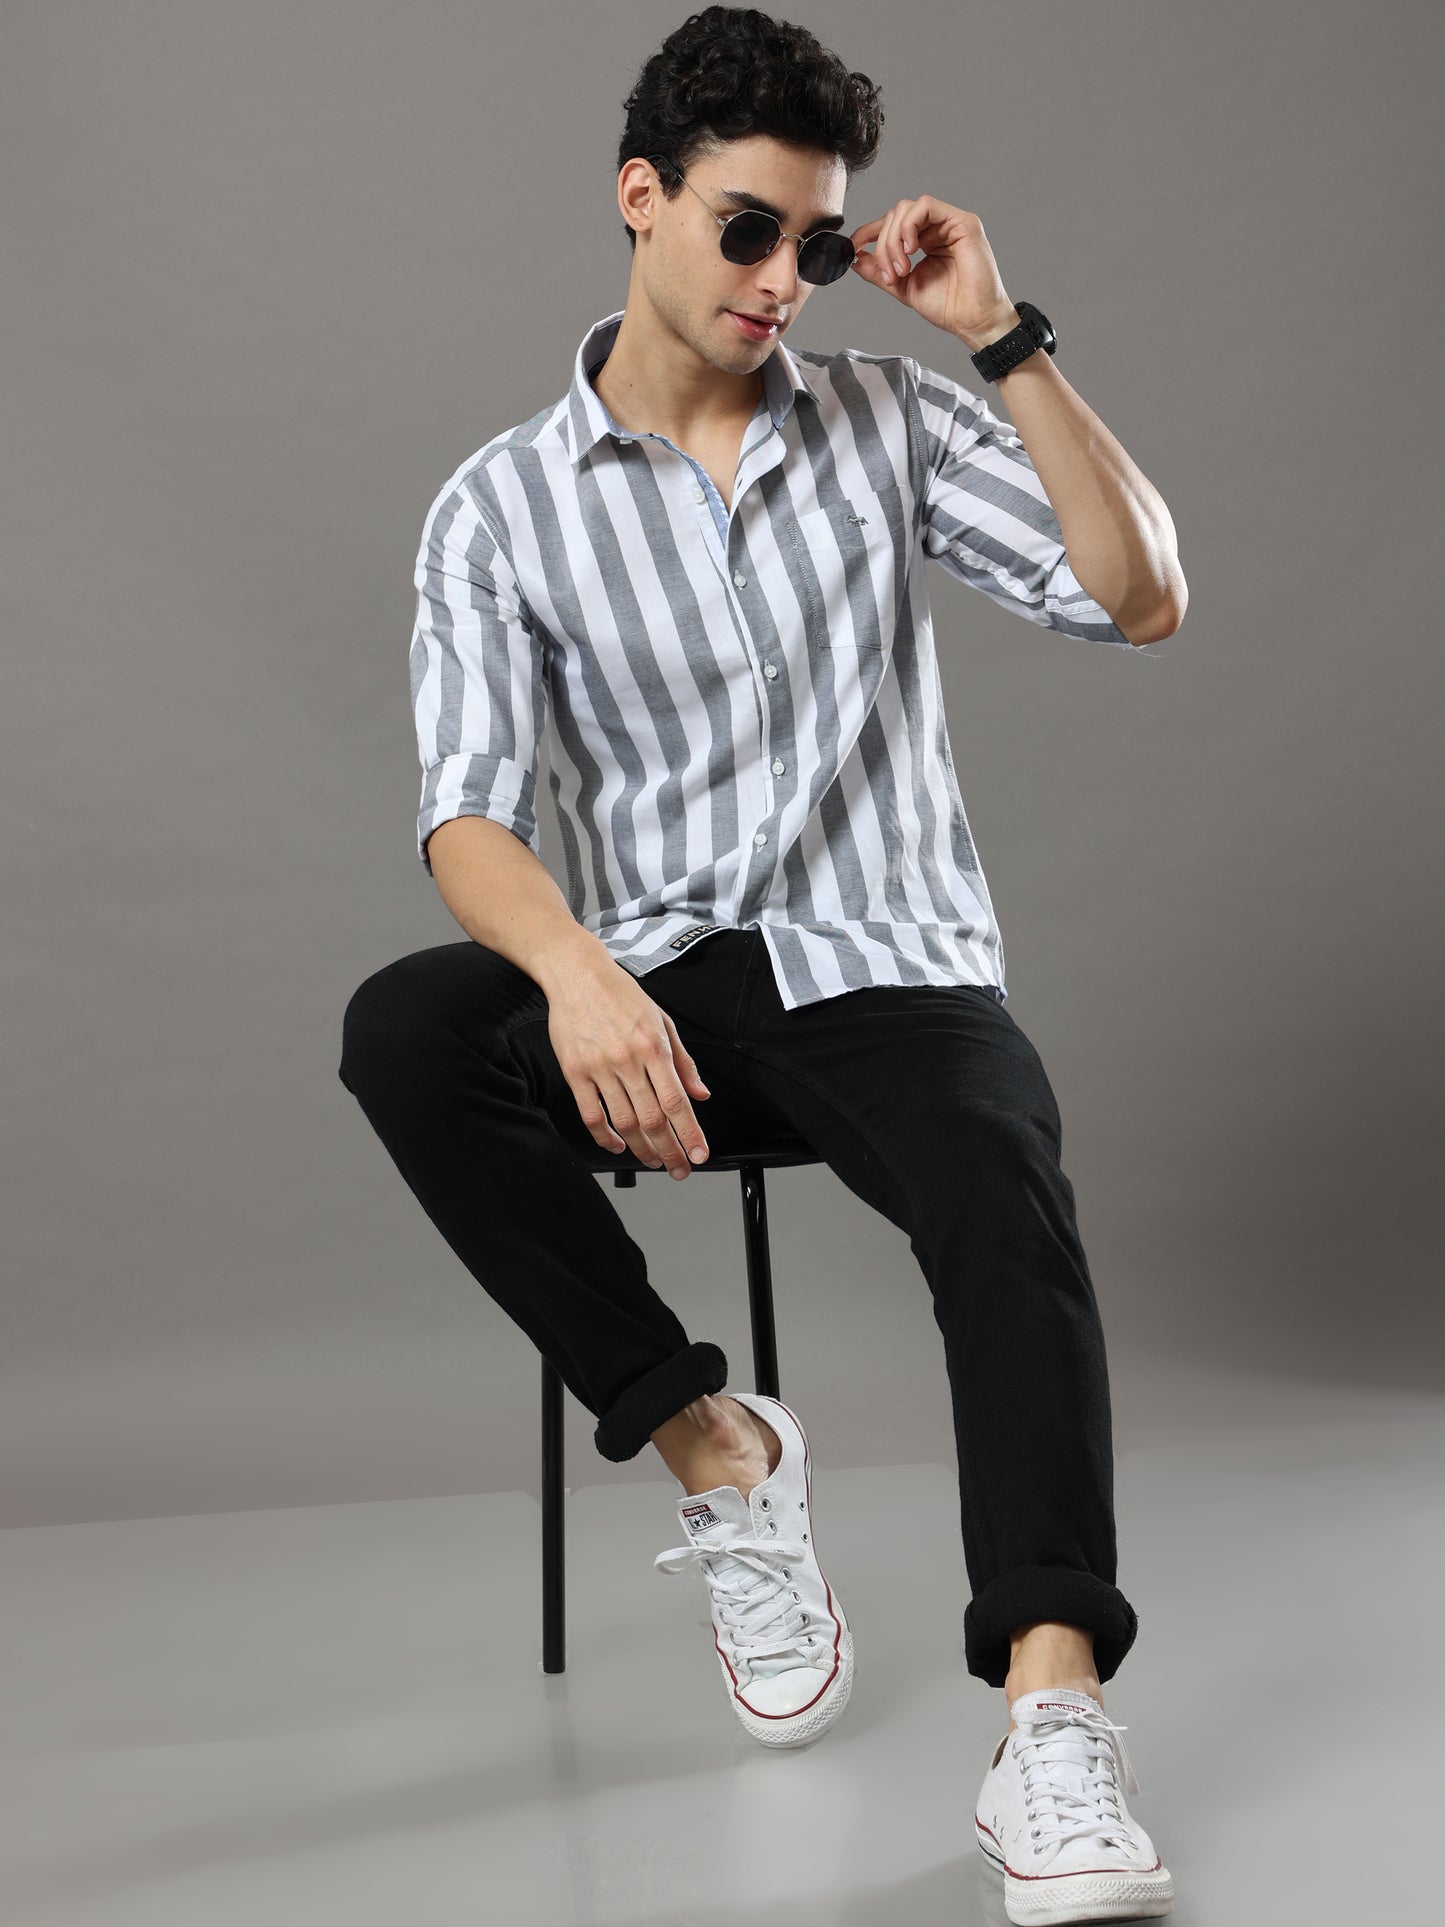 Black And White Stripes Shirt